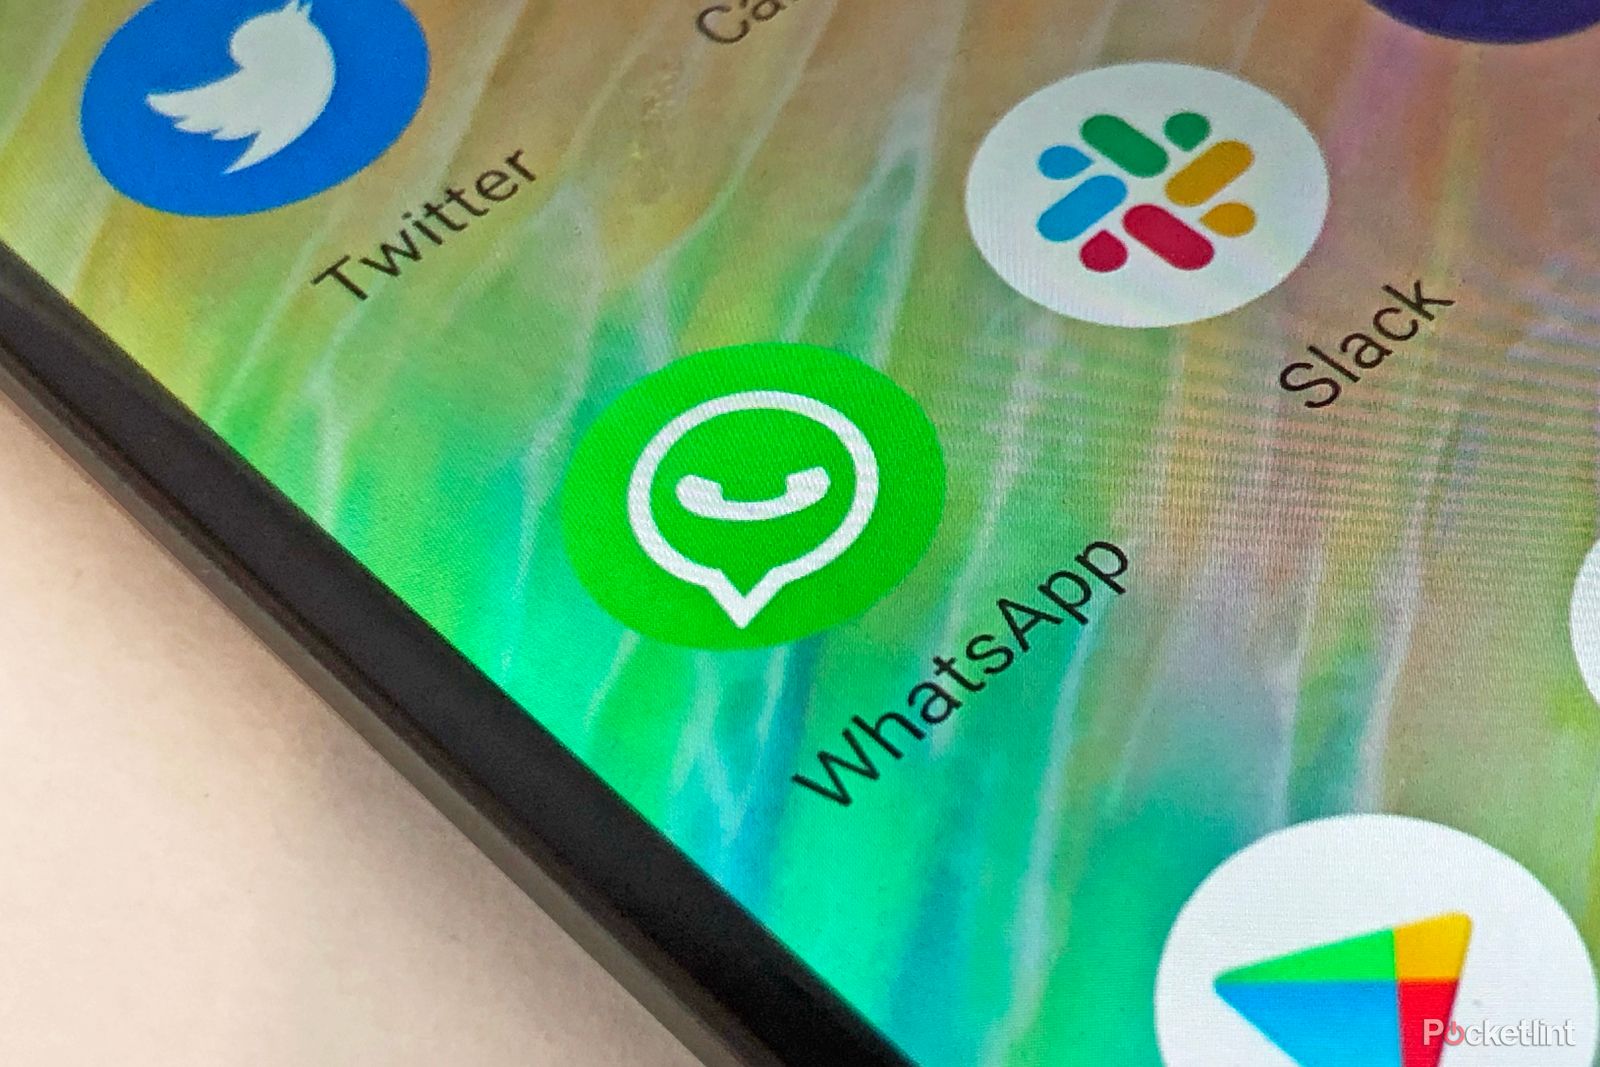 WhatsApp app icon on a phone